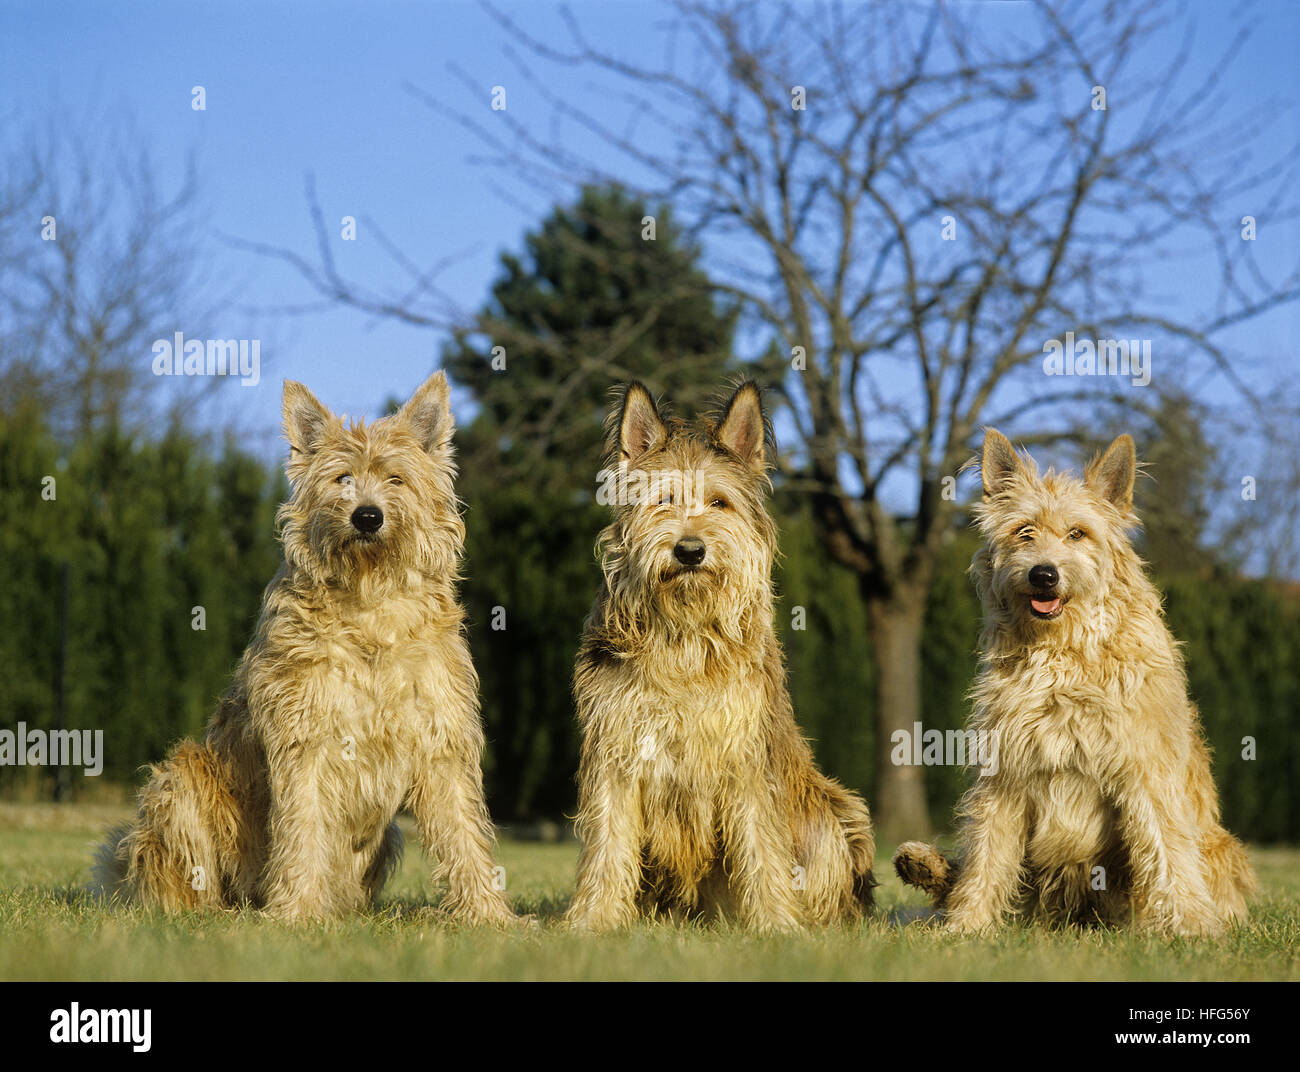 Picardy Shepherd Dog,  Adults sitting on Grass Stock Photo